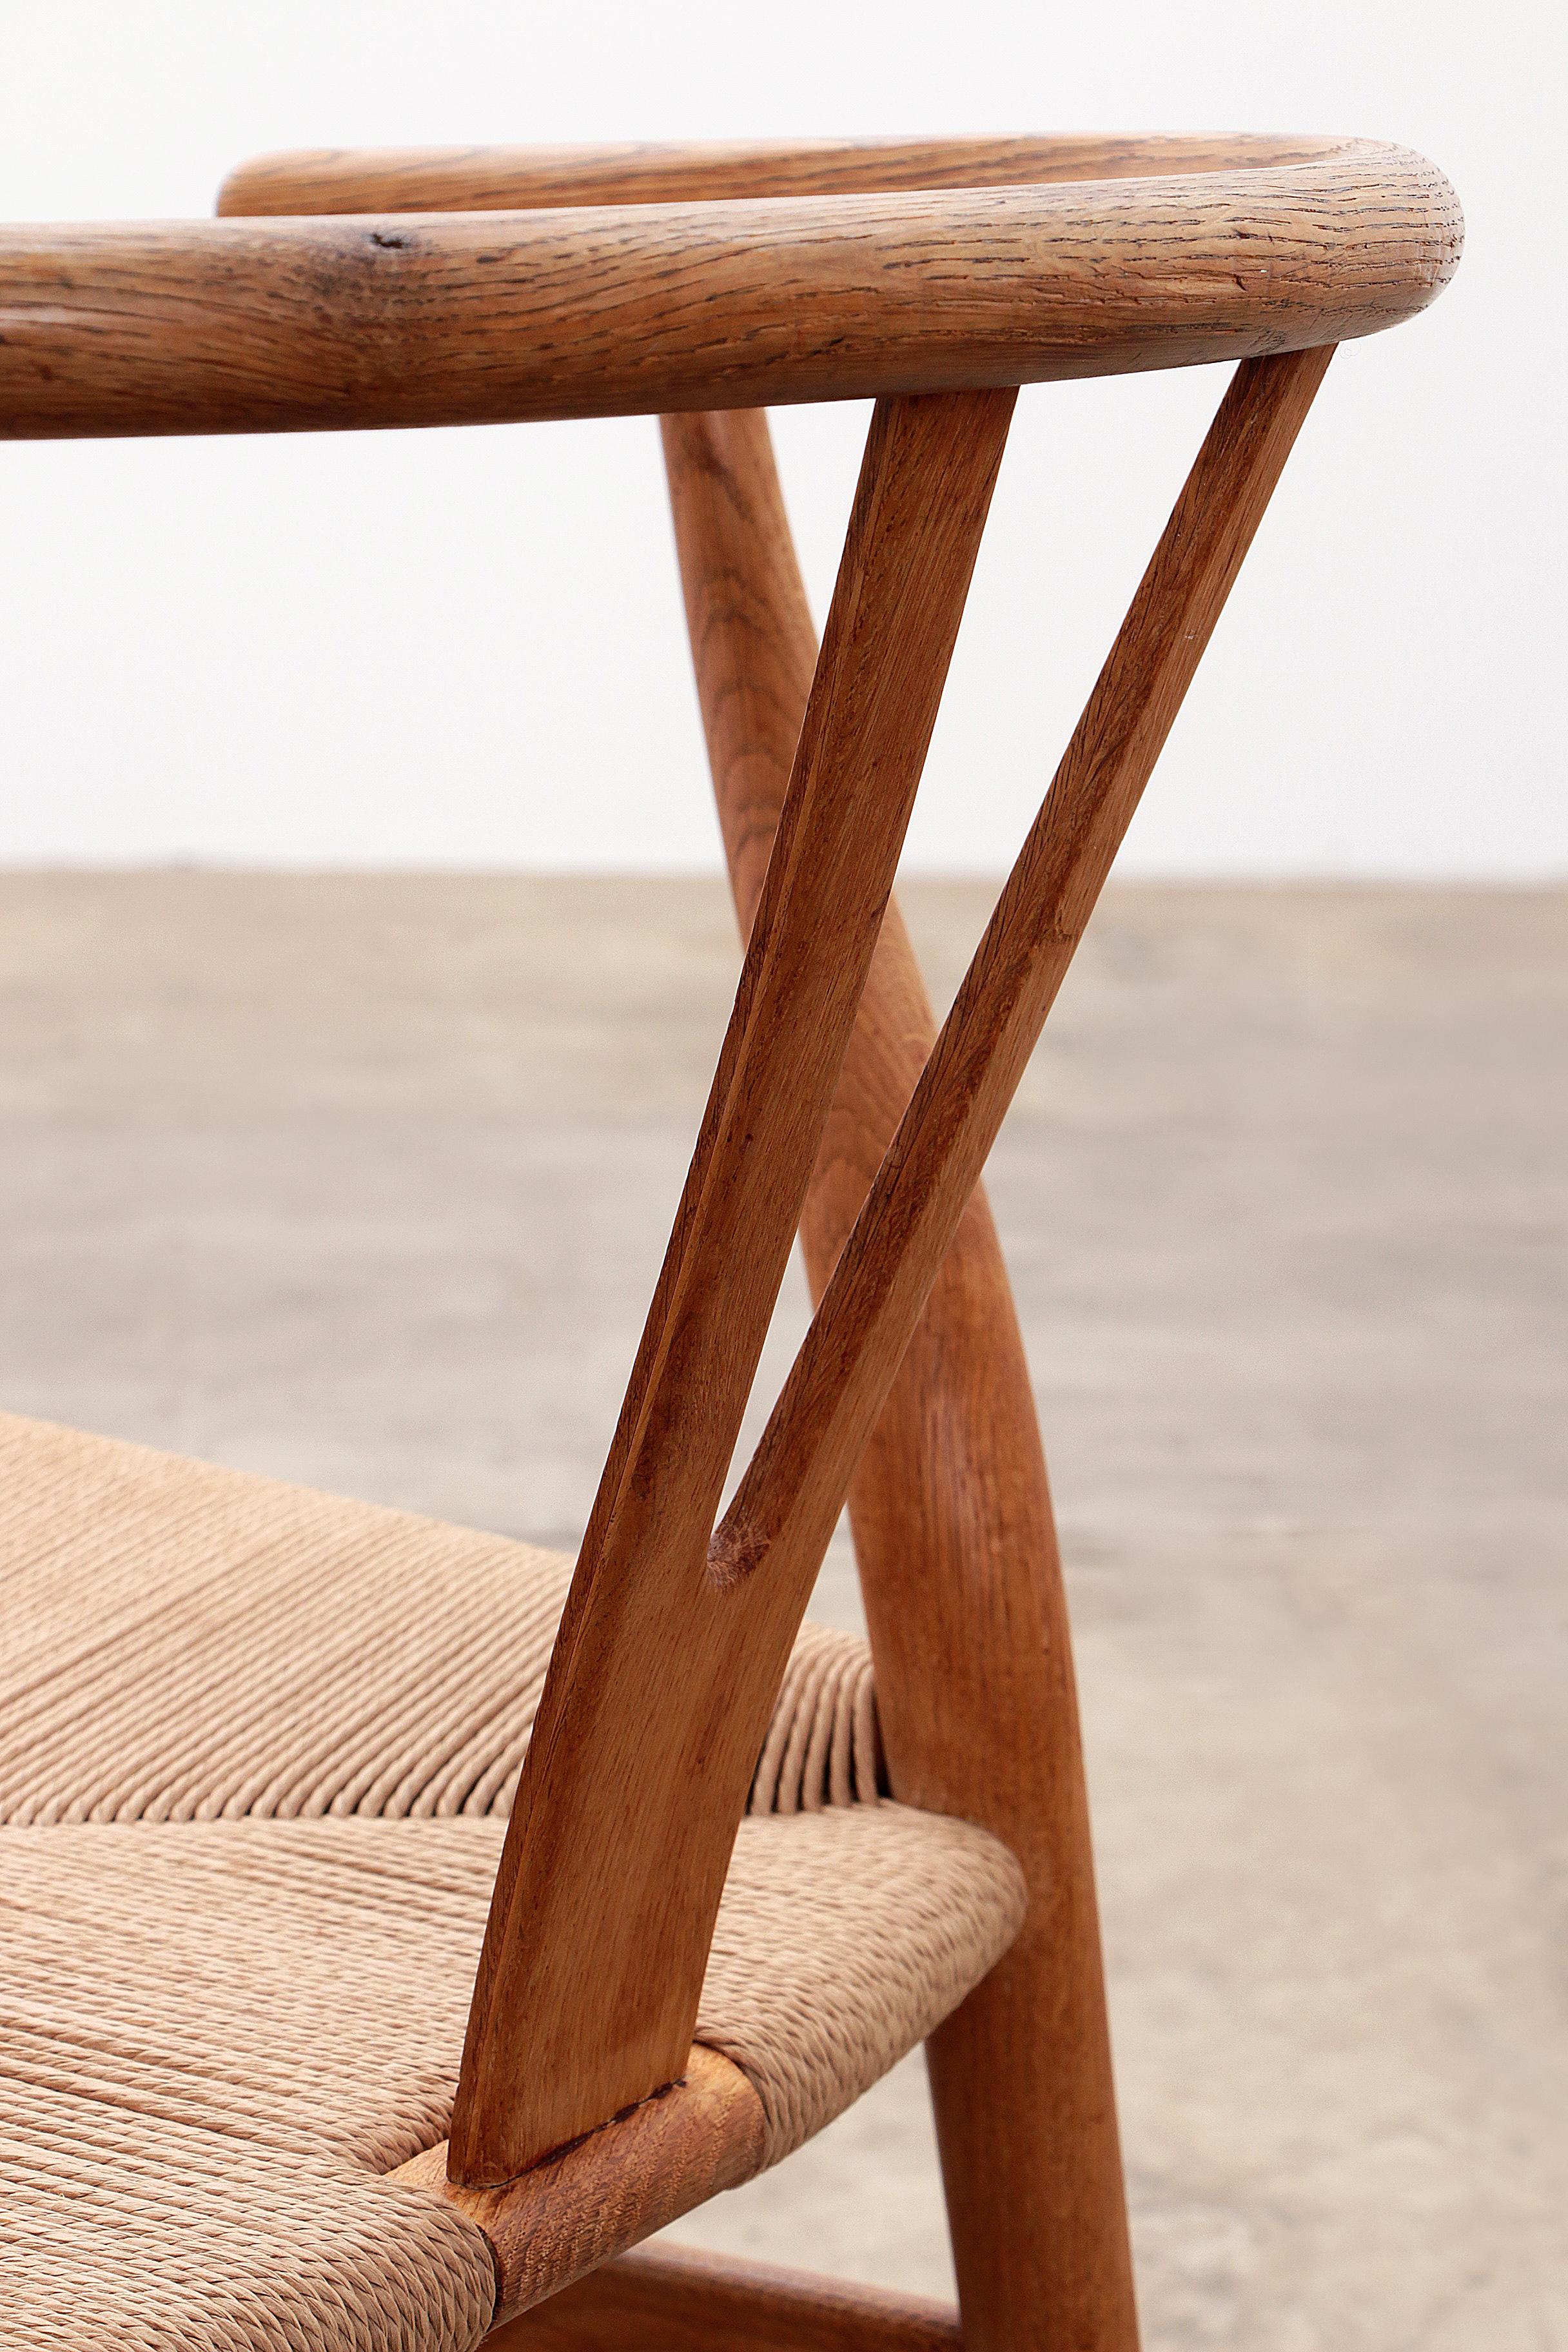 Hans Wegner Oak Wishbone Chairs made by Carl Hansen&Son 7